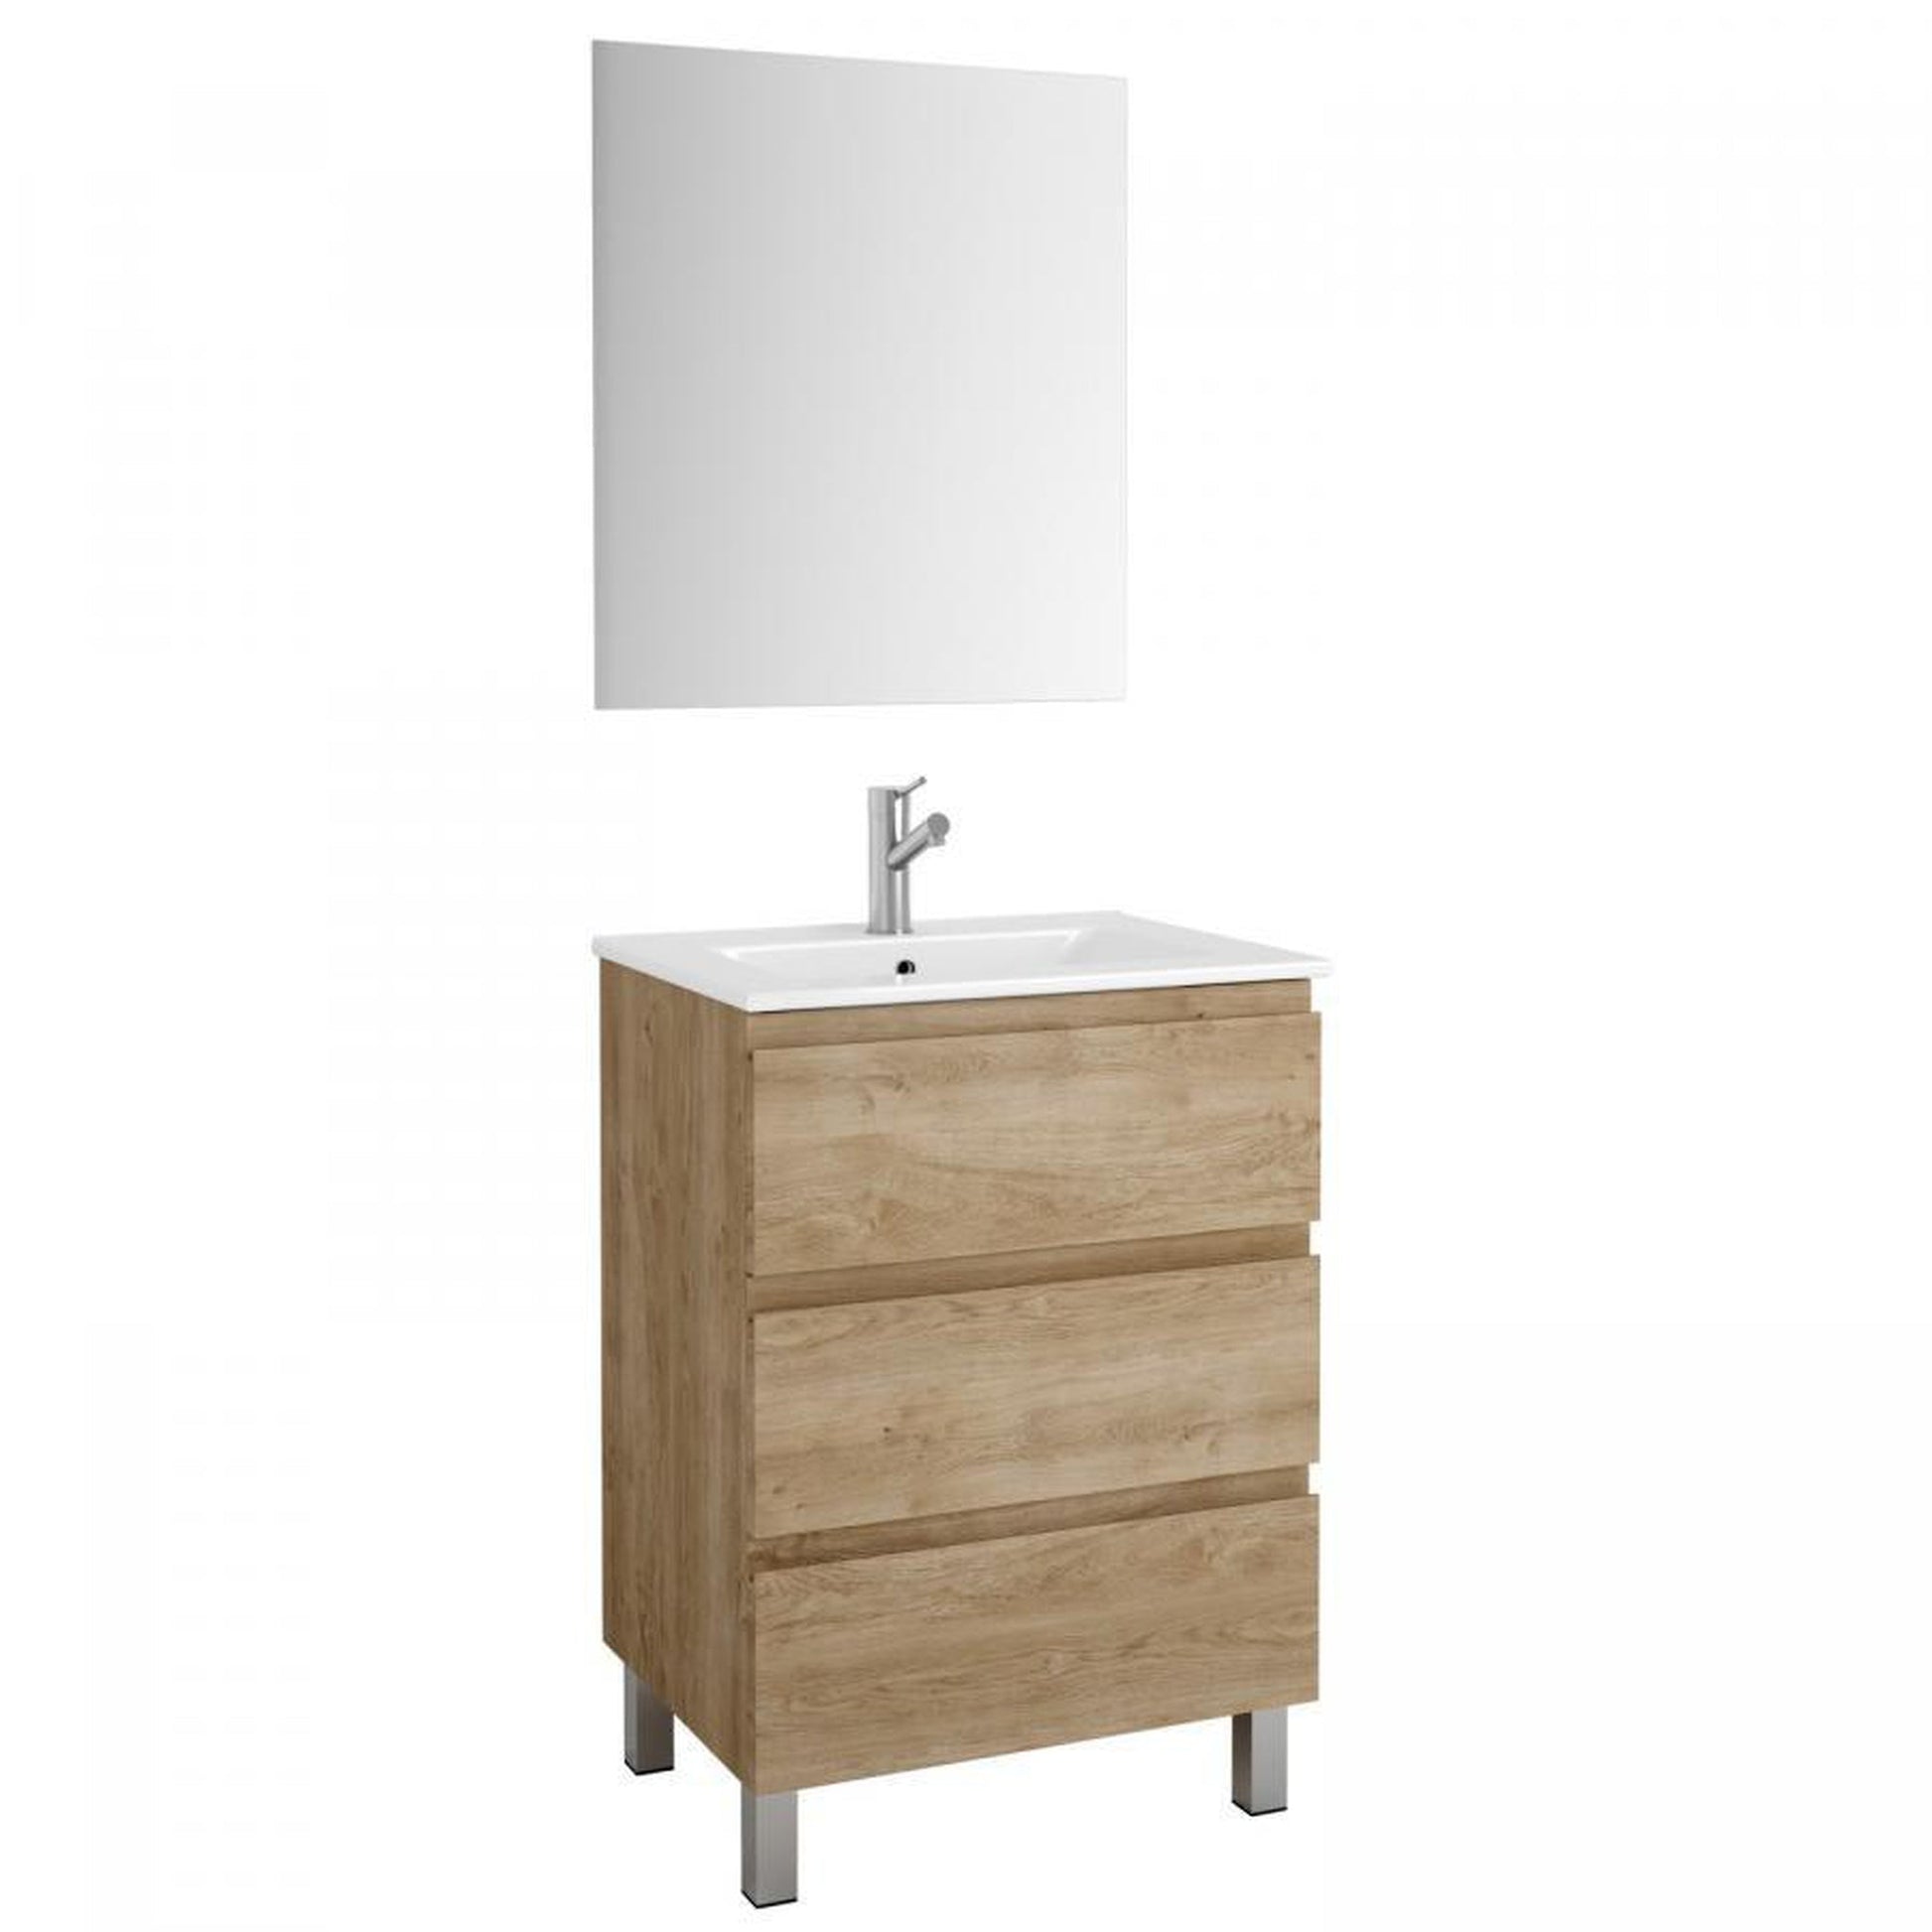 Eviva Vigo 24" x 34" Oak Freestanding Bathroom Vanity With White Integrated Porcelain Sink